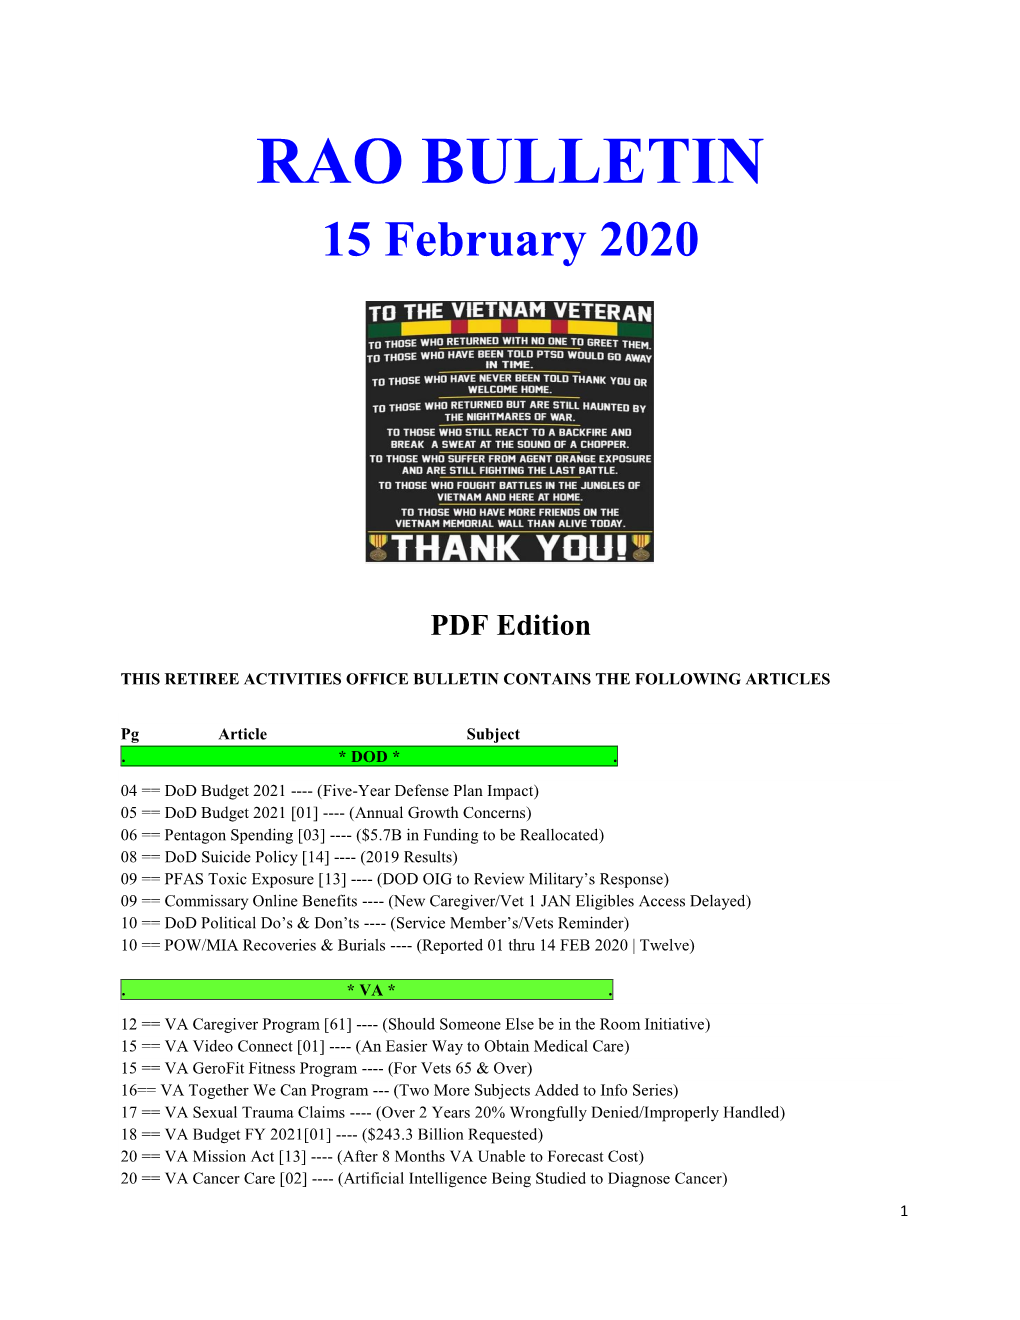 RAO BULLETIN 15 February 2020 PDF Edition